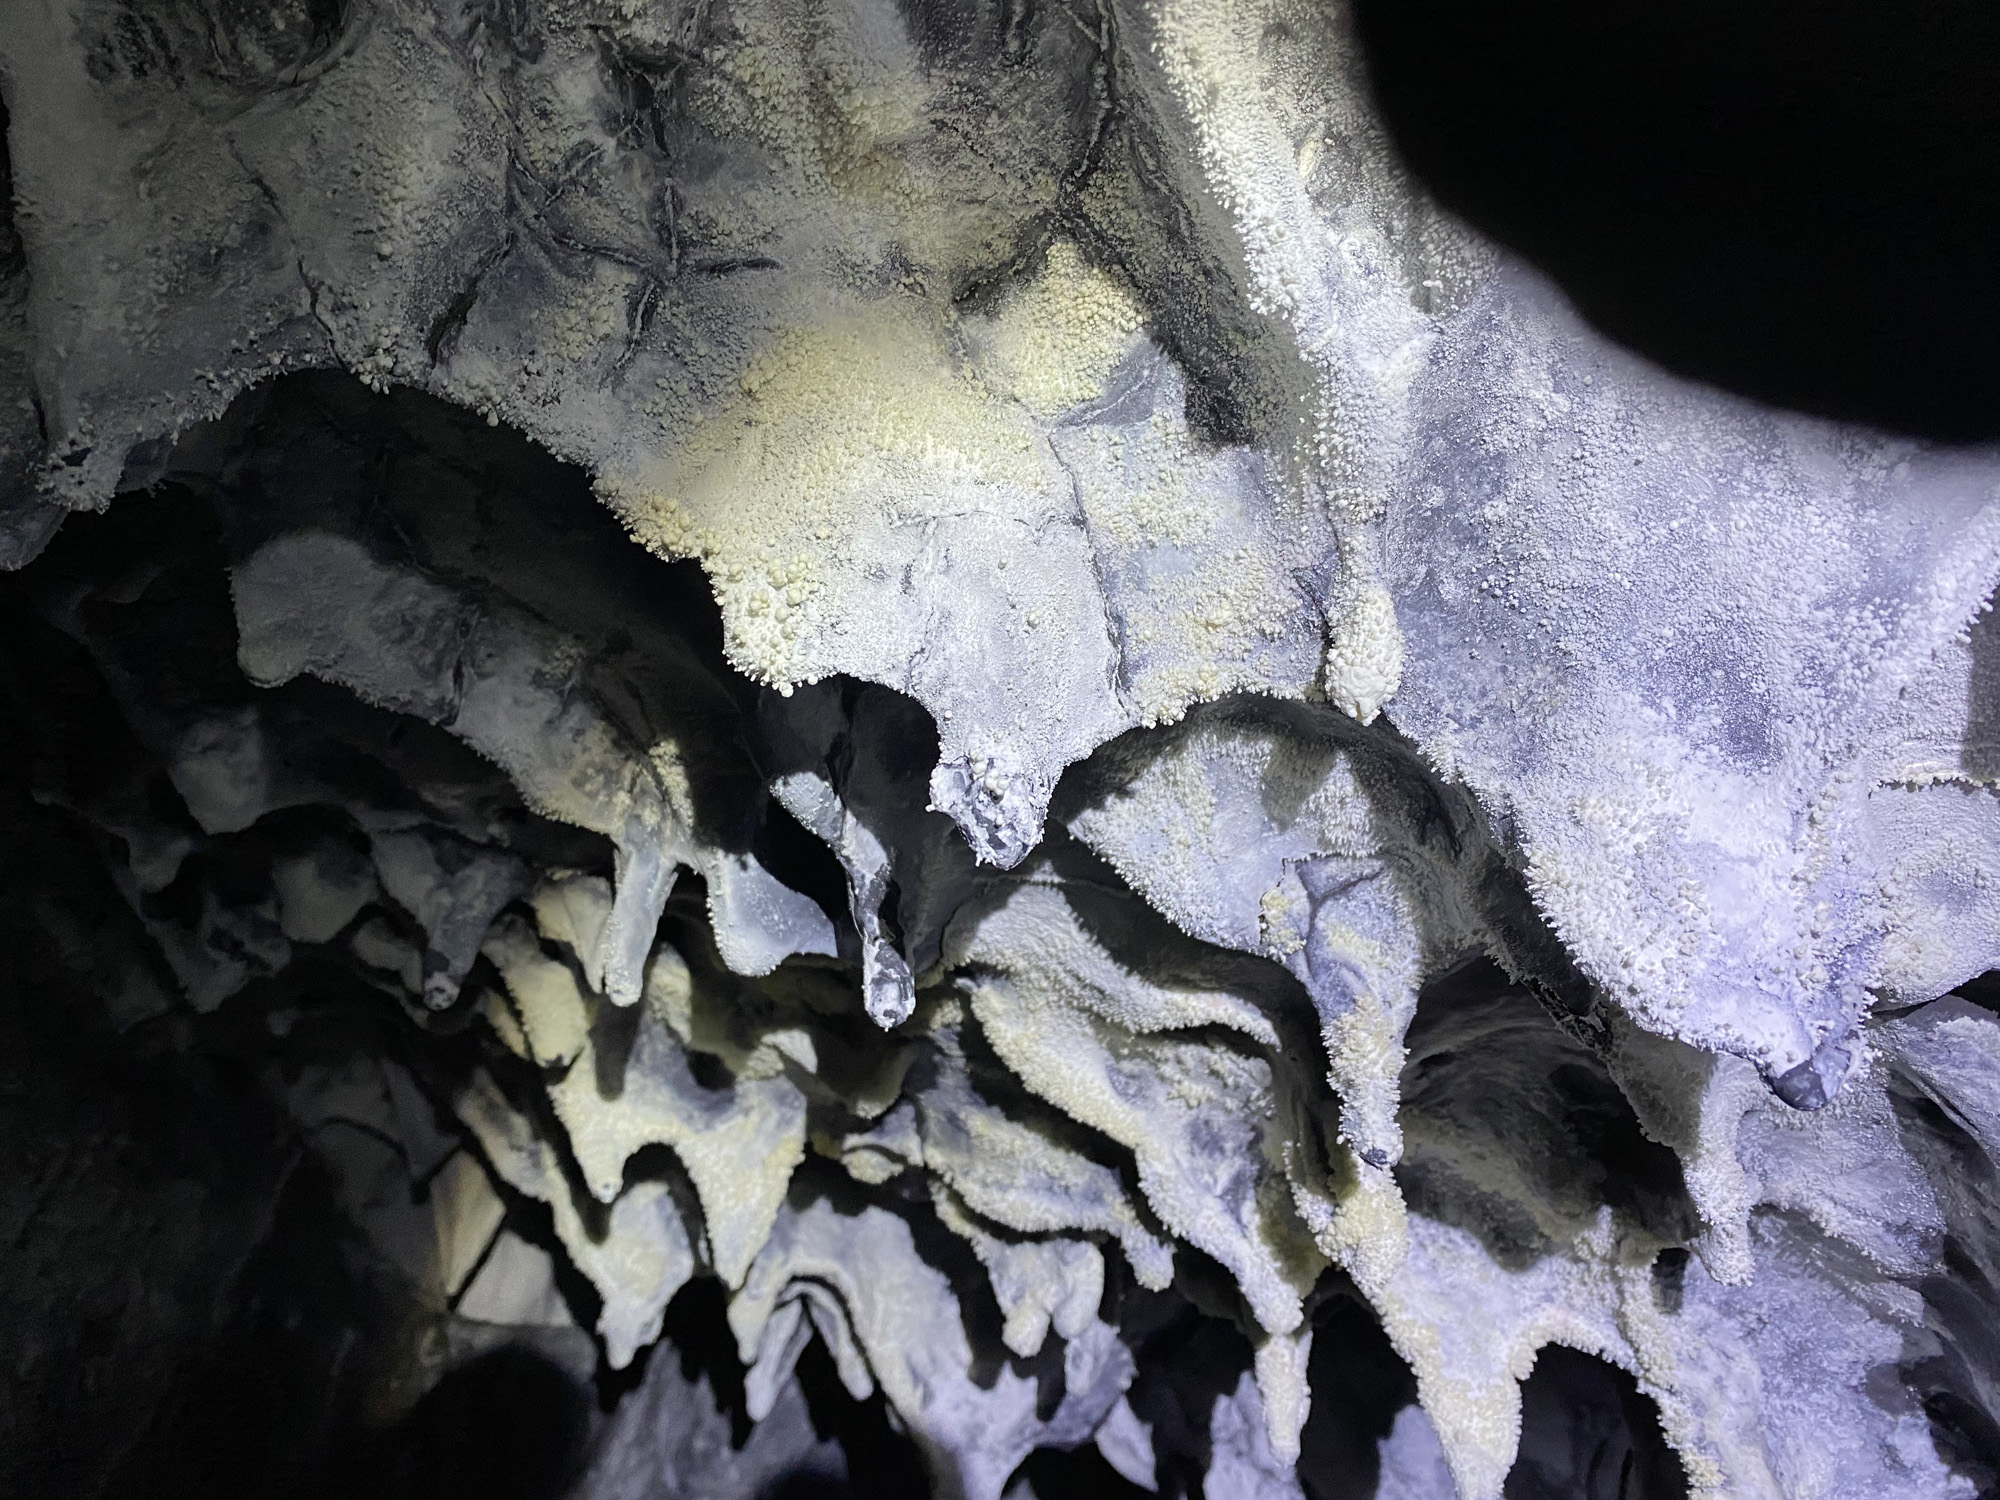 Lava stalactites inside a lava cave in the volcanic terrain around HI-SEAS.